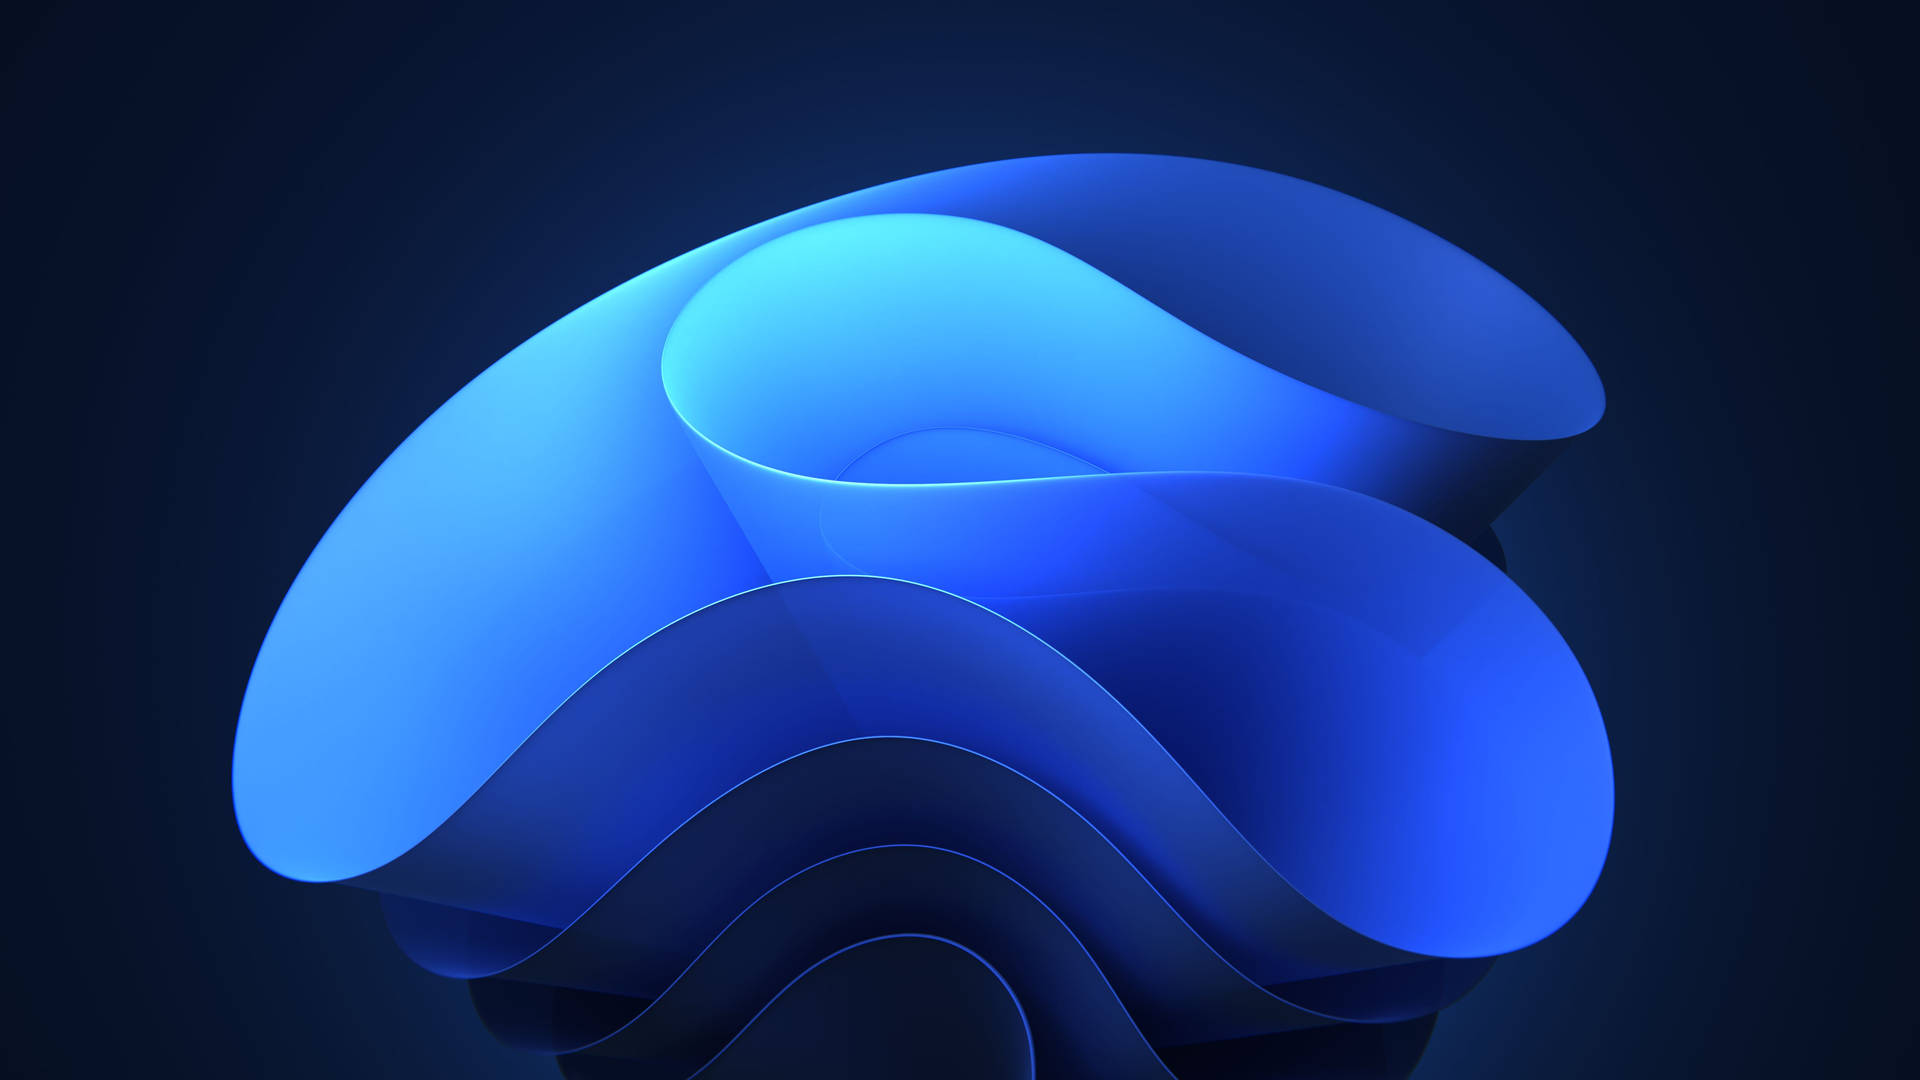 4d Ultra Hd Blue Waveform Picture